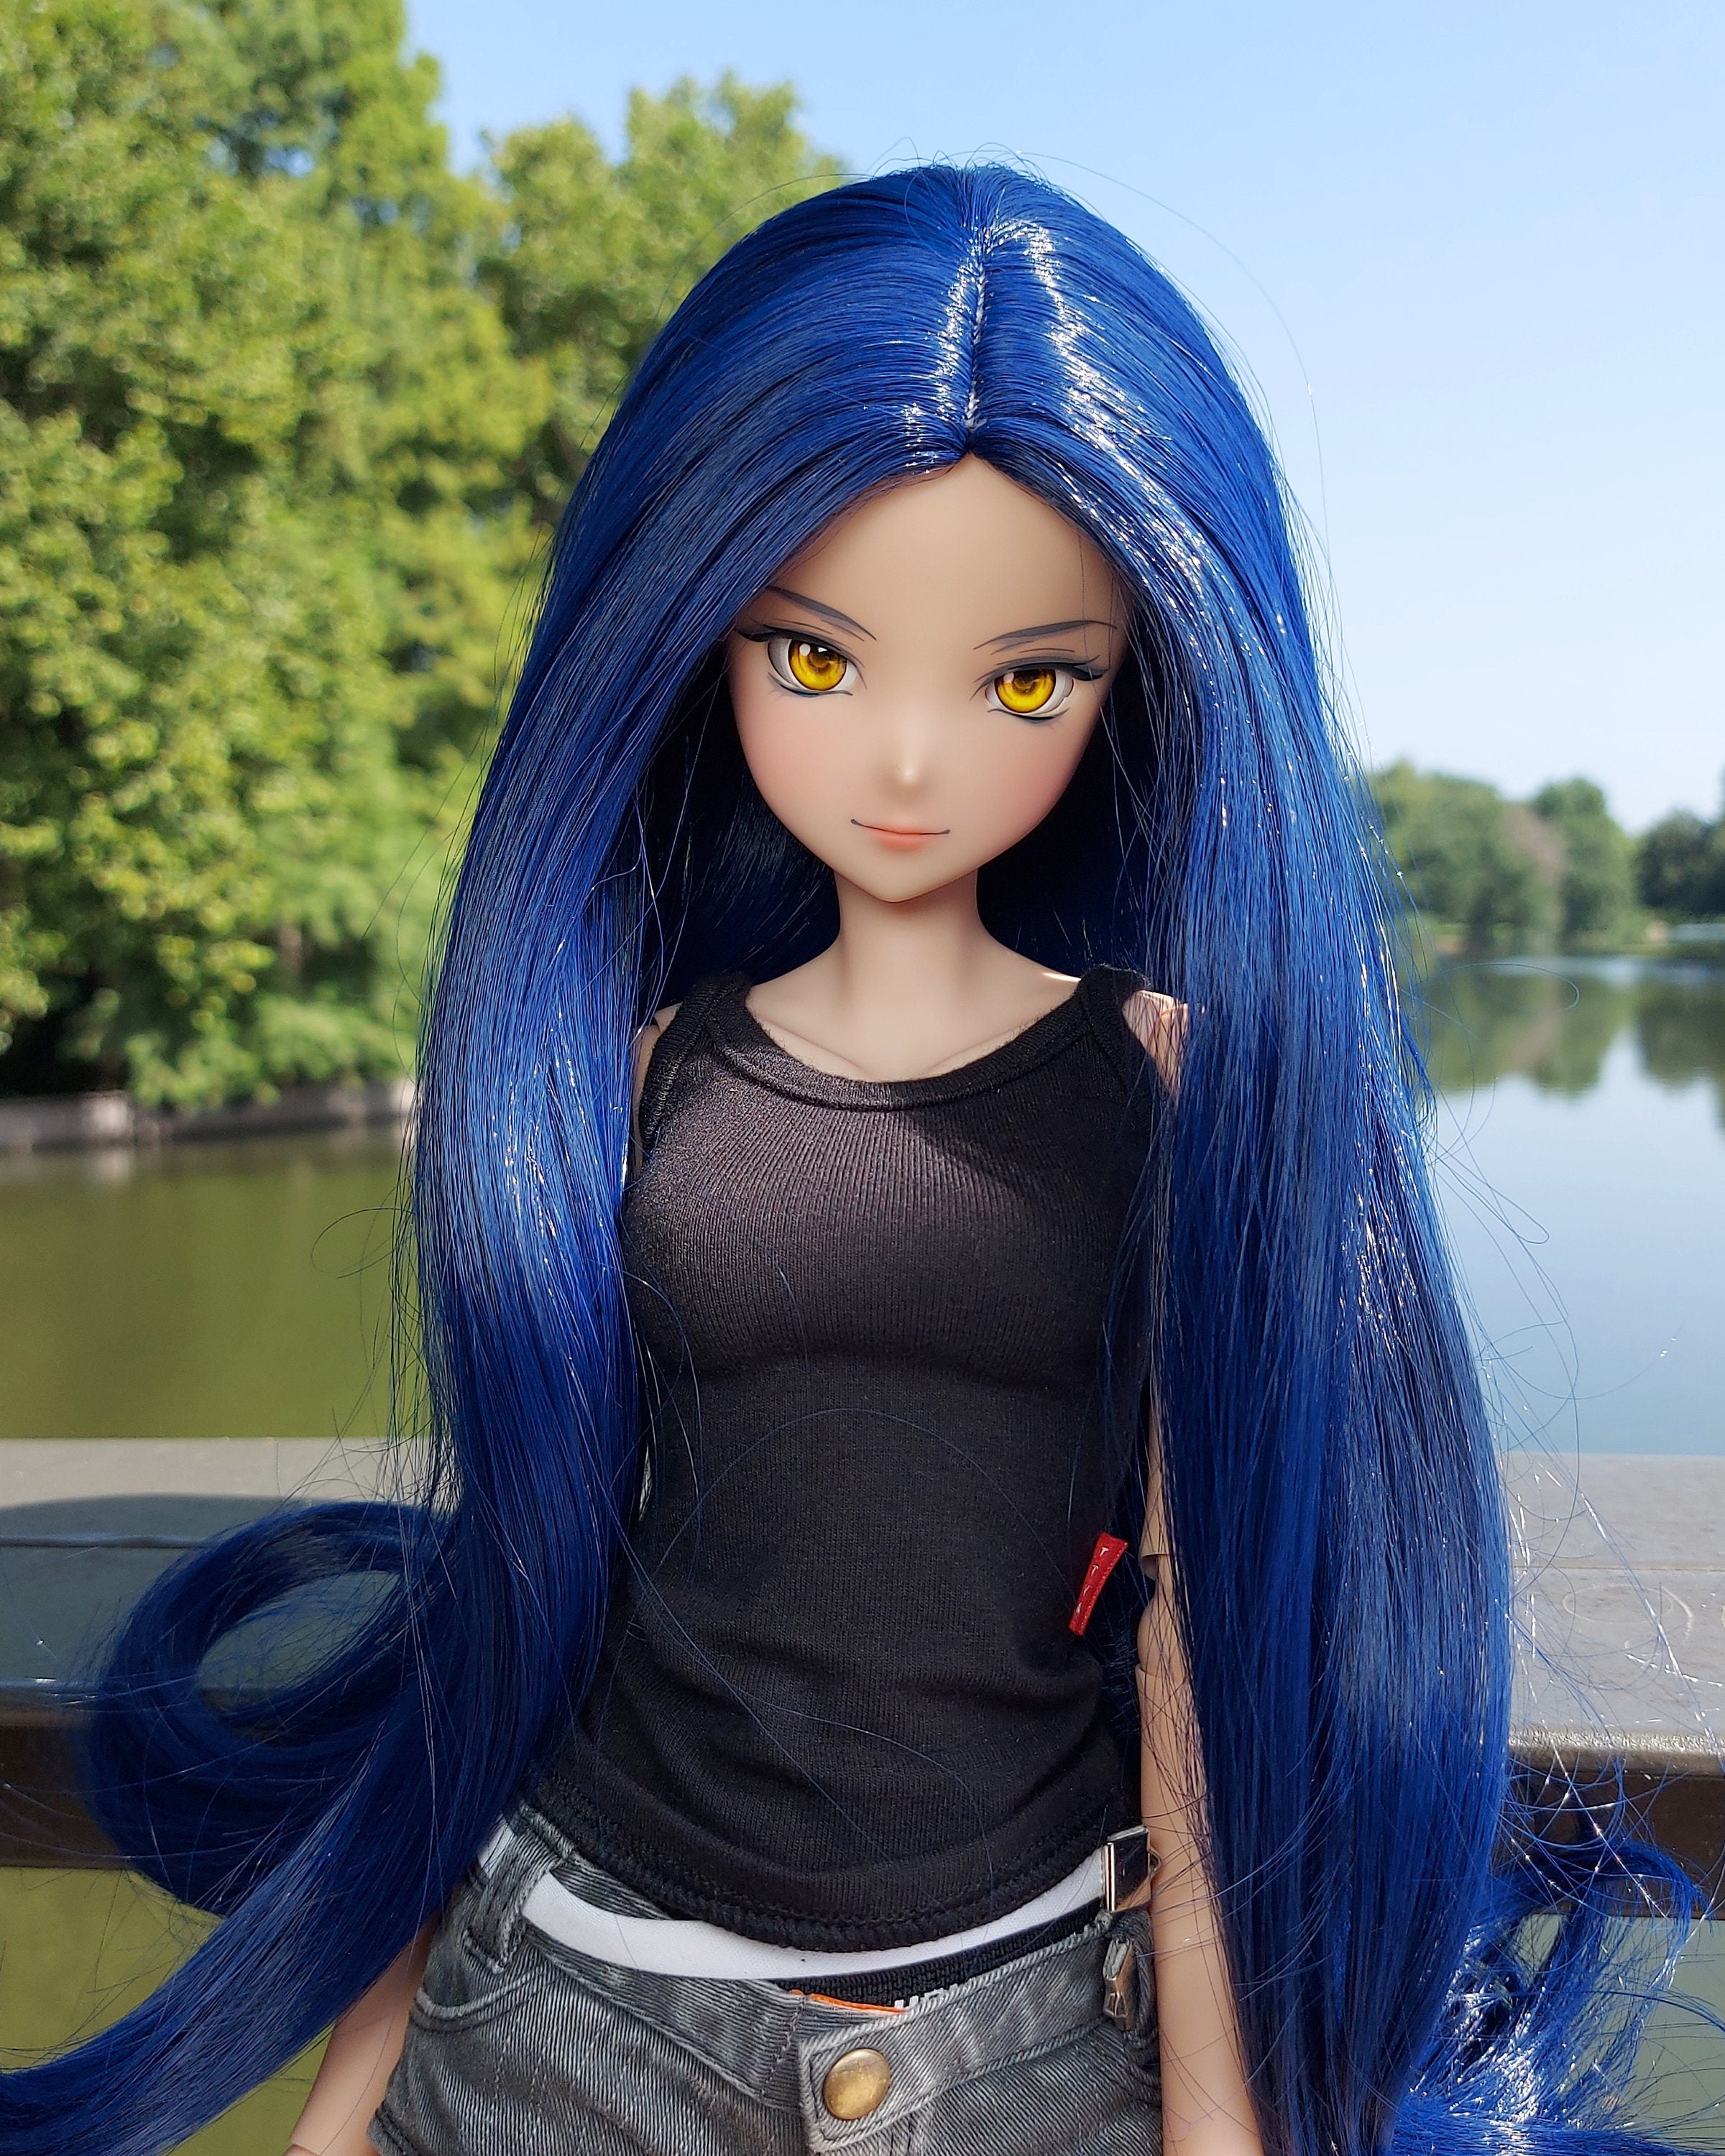 Custom doll Wig for Smart Dolls- "TAN CAPS" 8.5" head size of Bjd, SD, Dollfie Dream dolls deep blue